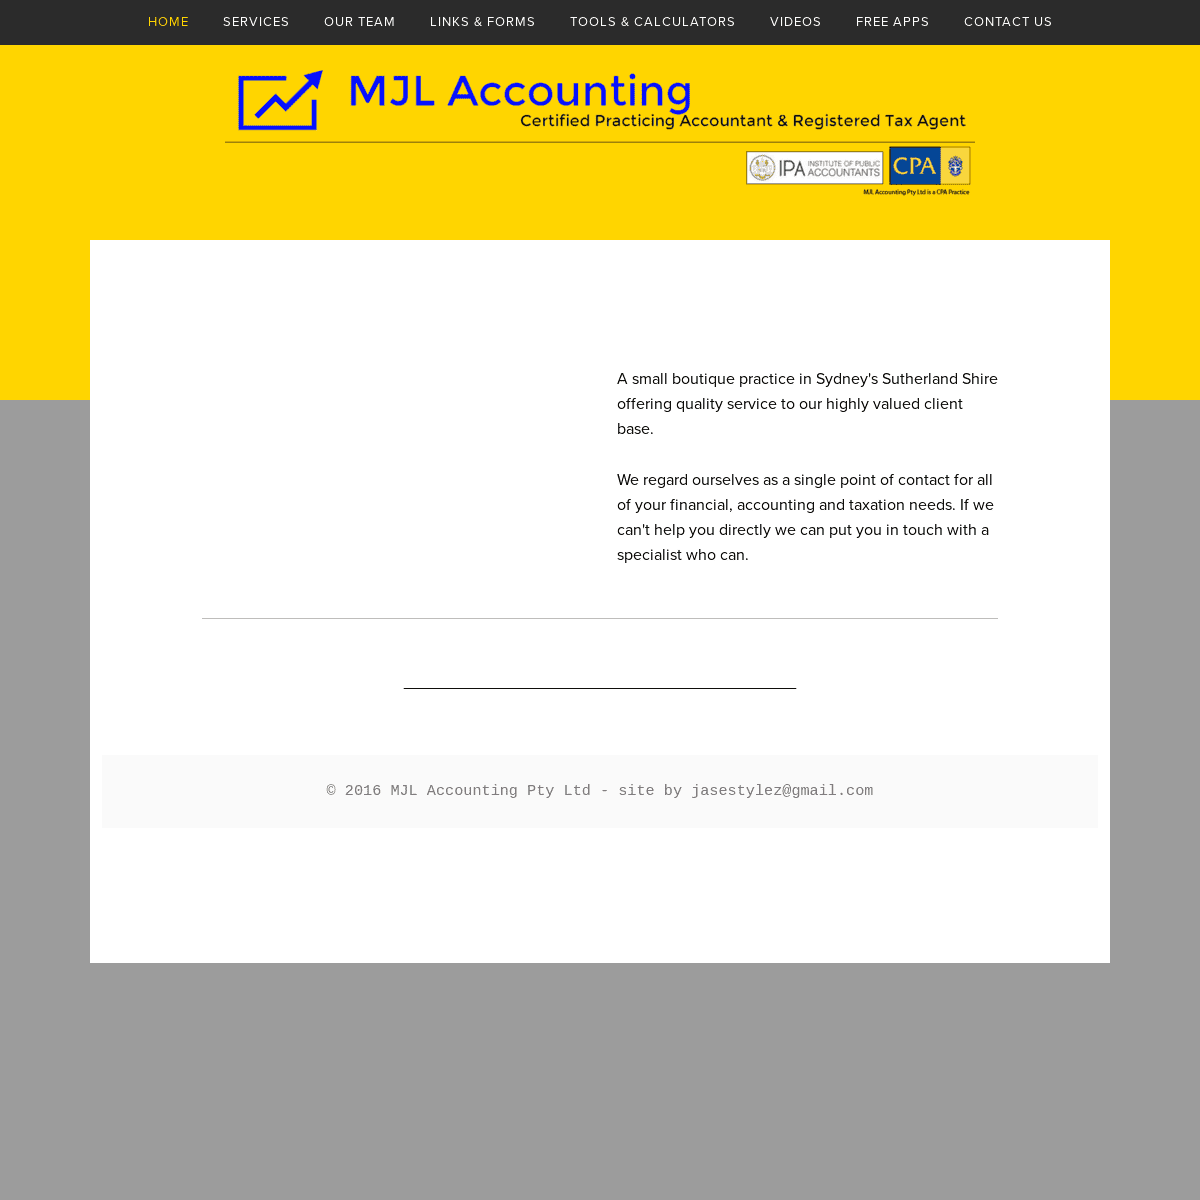 MJL Accounting